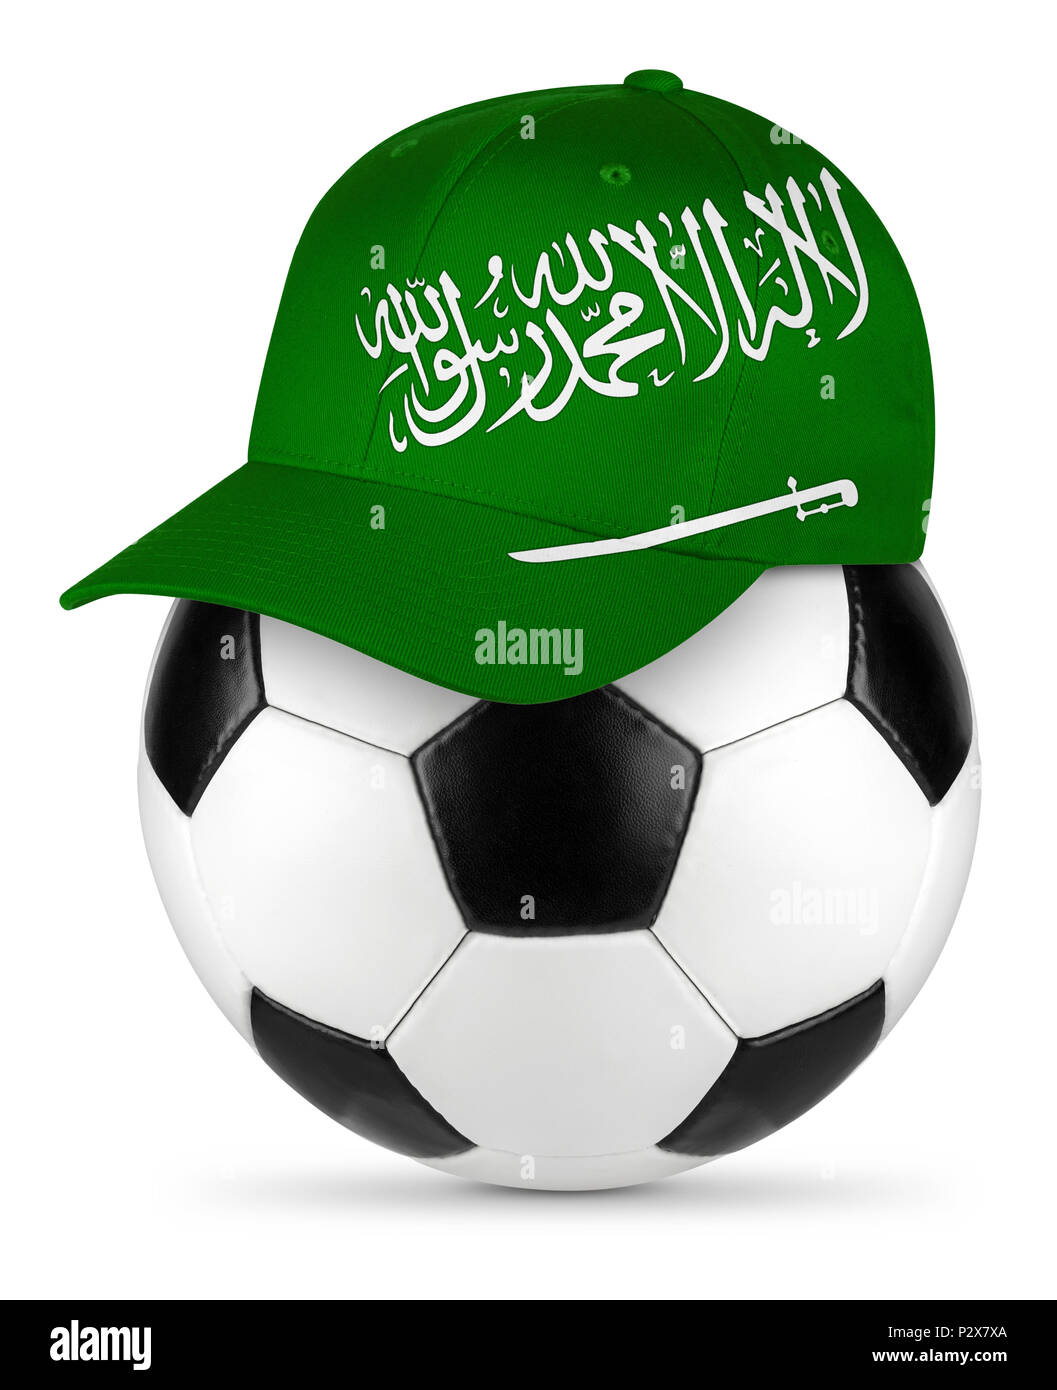 Classic black white leather soccer ball with saudi arabia arabian baseball fan cap isolated background sport football concept Stock Photo